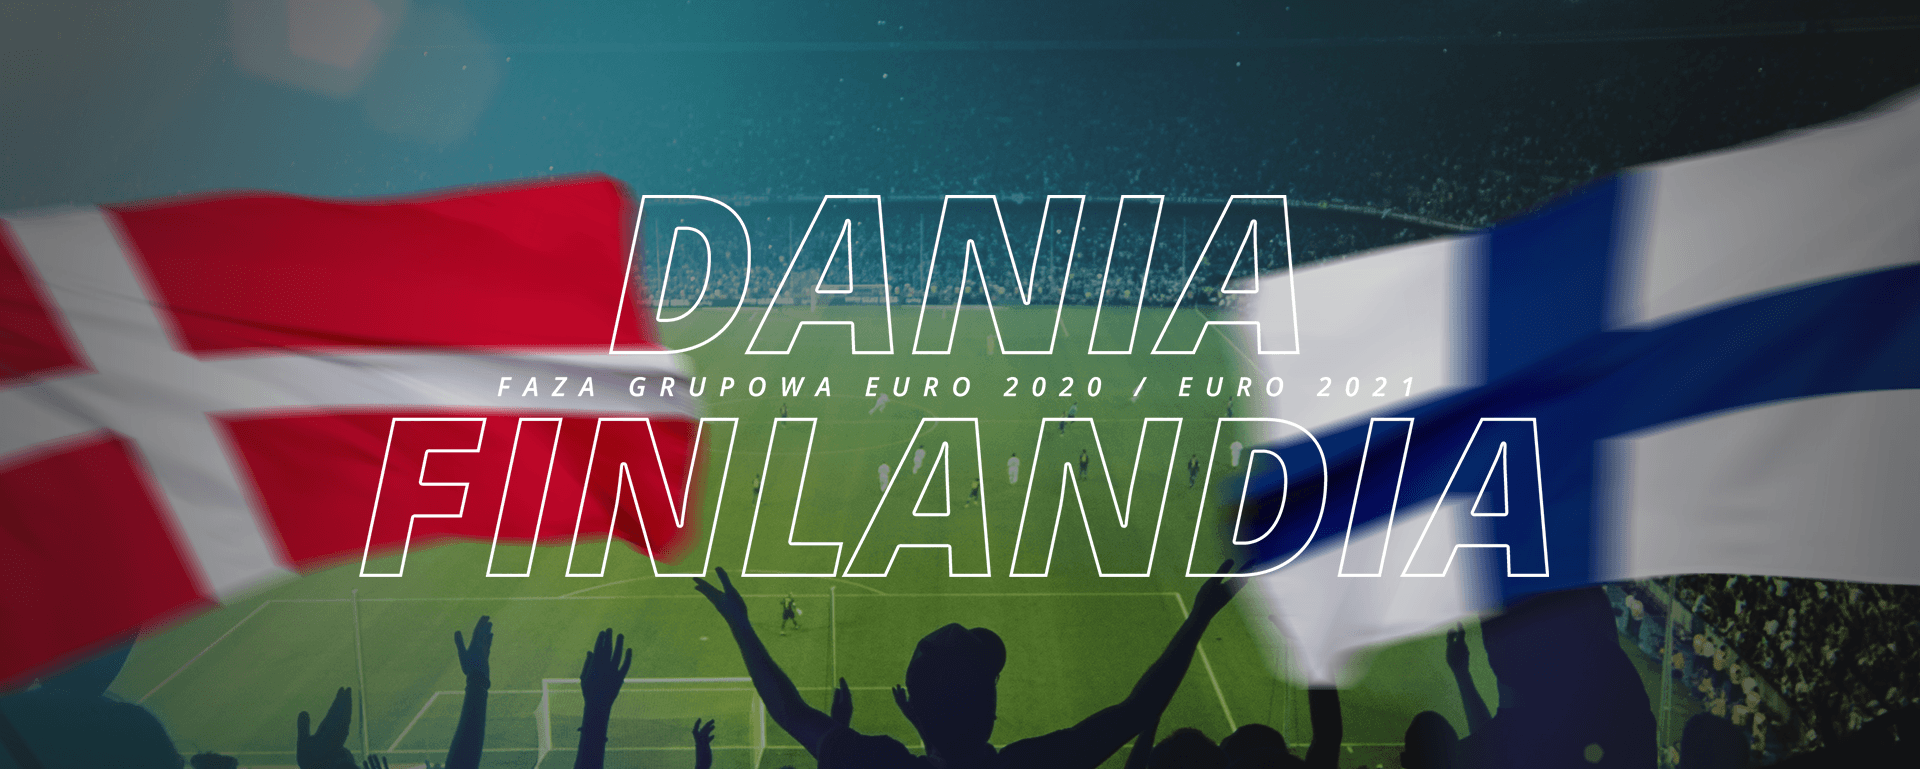 Dania – Finlandia | faza grupowa Euro 2020 / Euro 2021